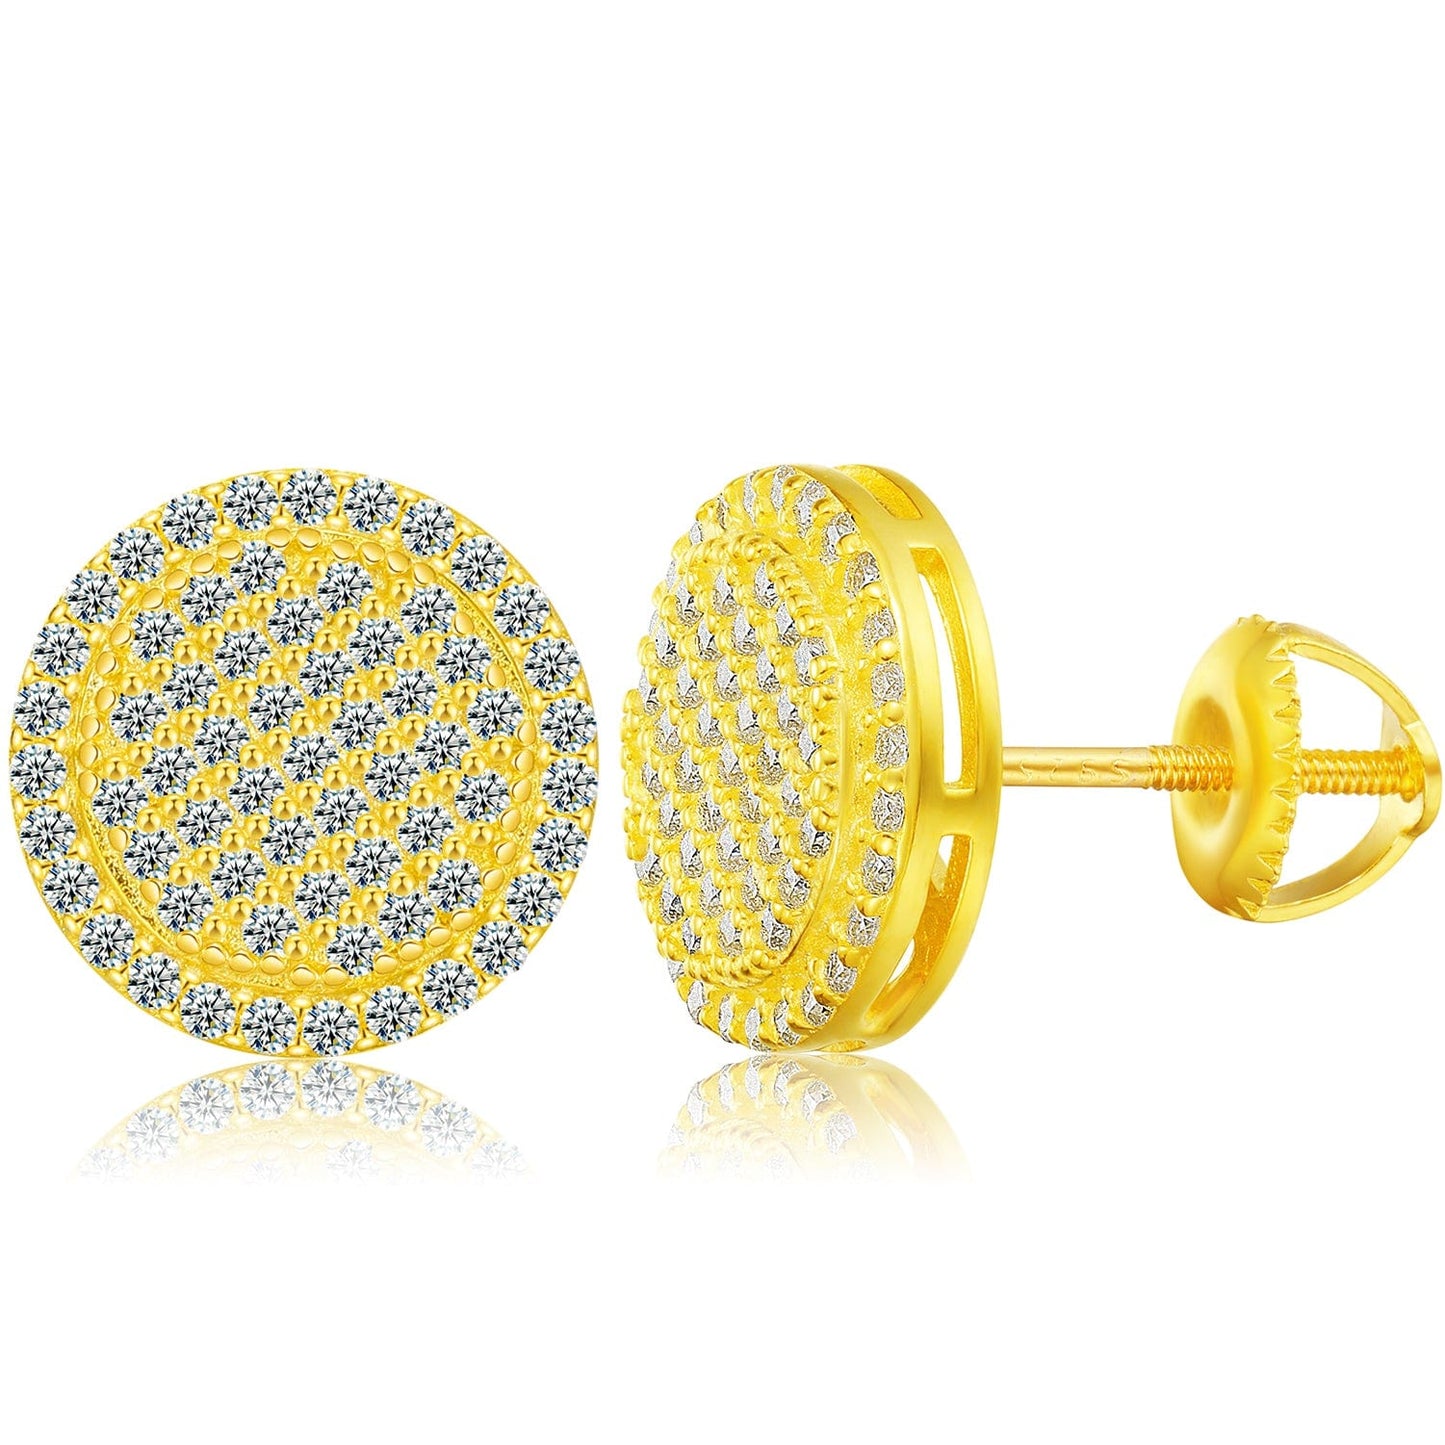 Gold 18K Gold Plated Iced Out Stud Earrings - VVS Moissanite Diamond